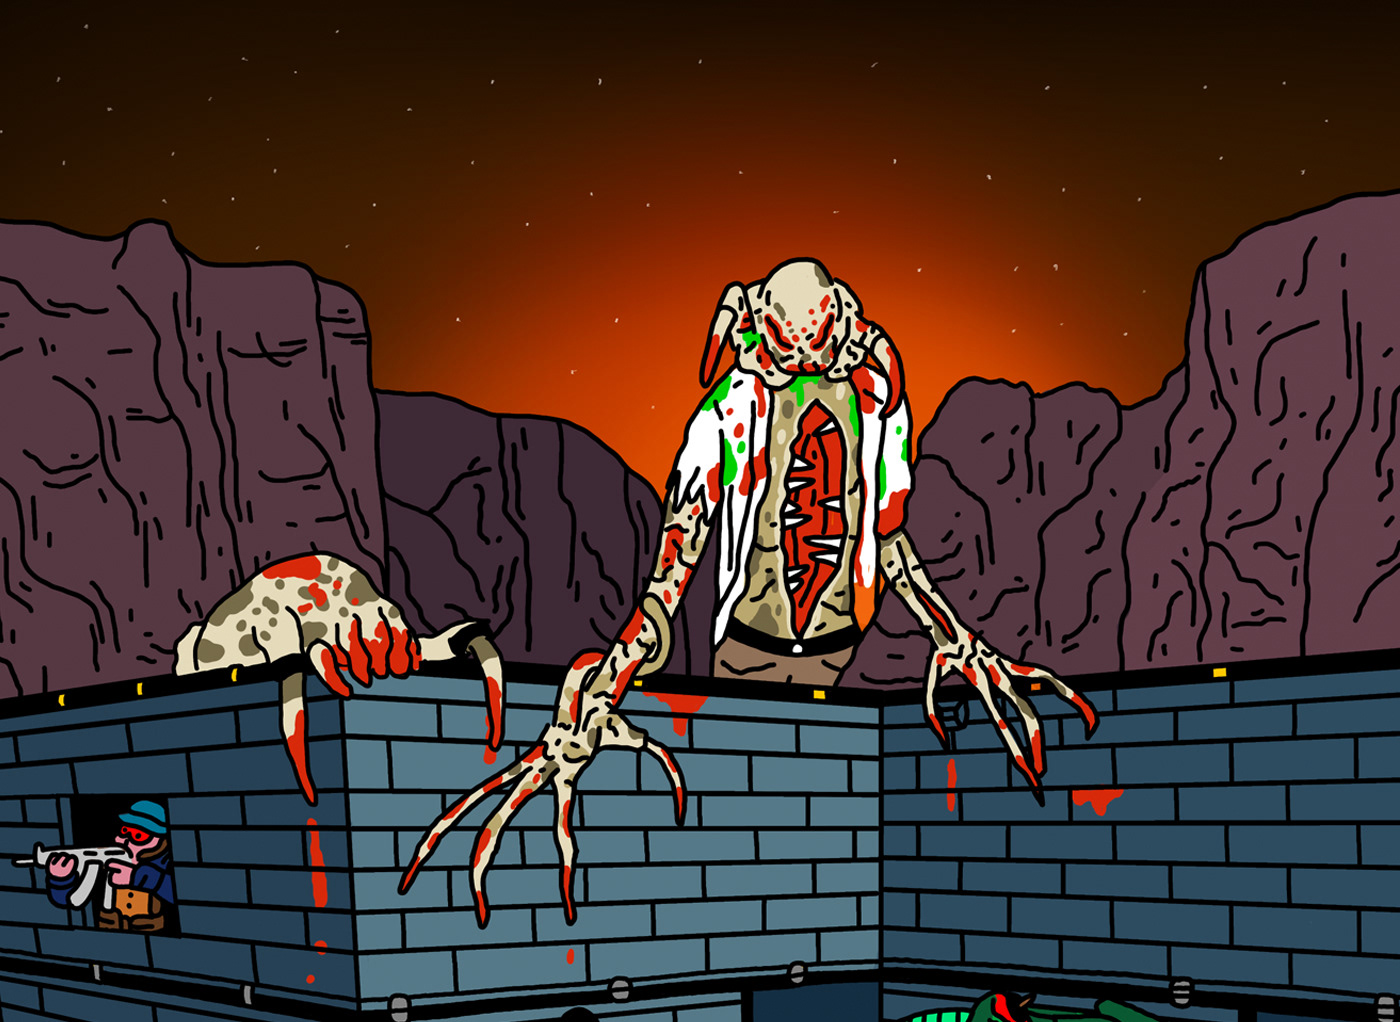 ILLUSTRATION  art artwork game halflife Valve zombie crossfire skeleton dinosaurs